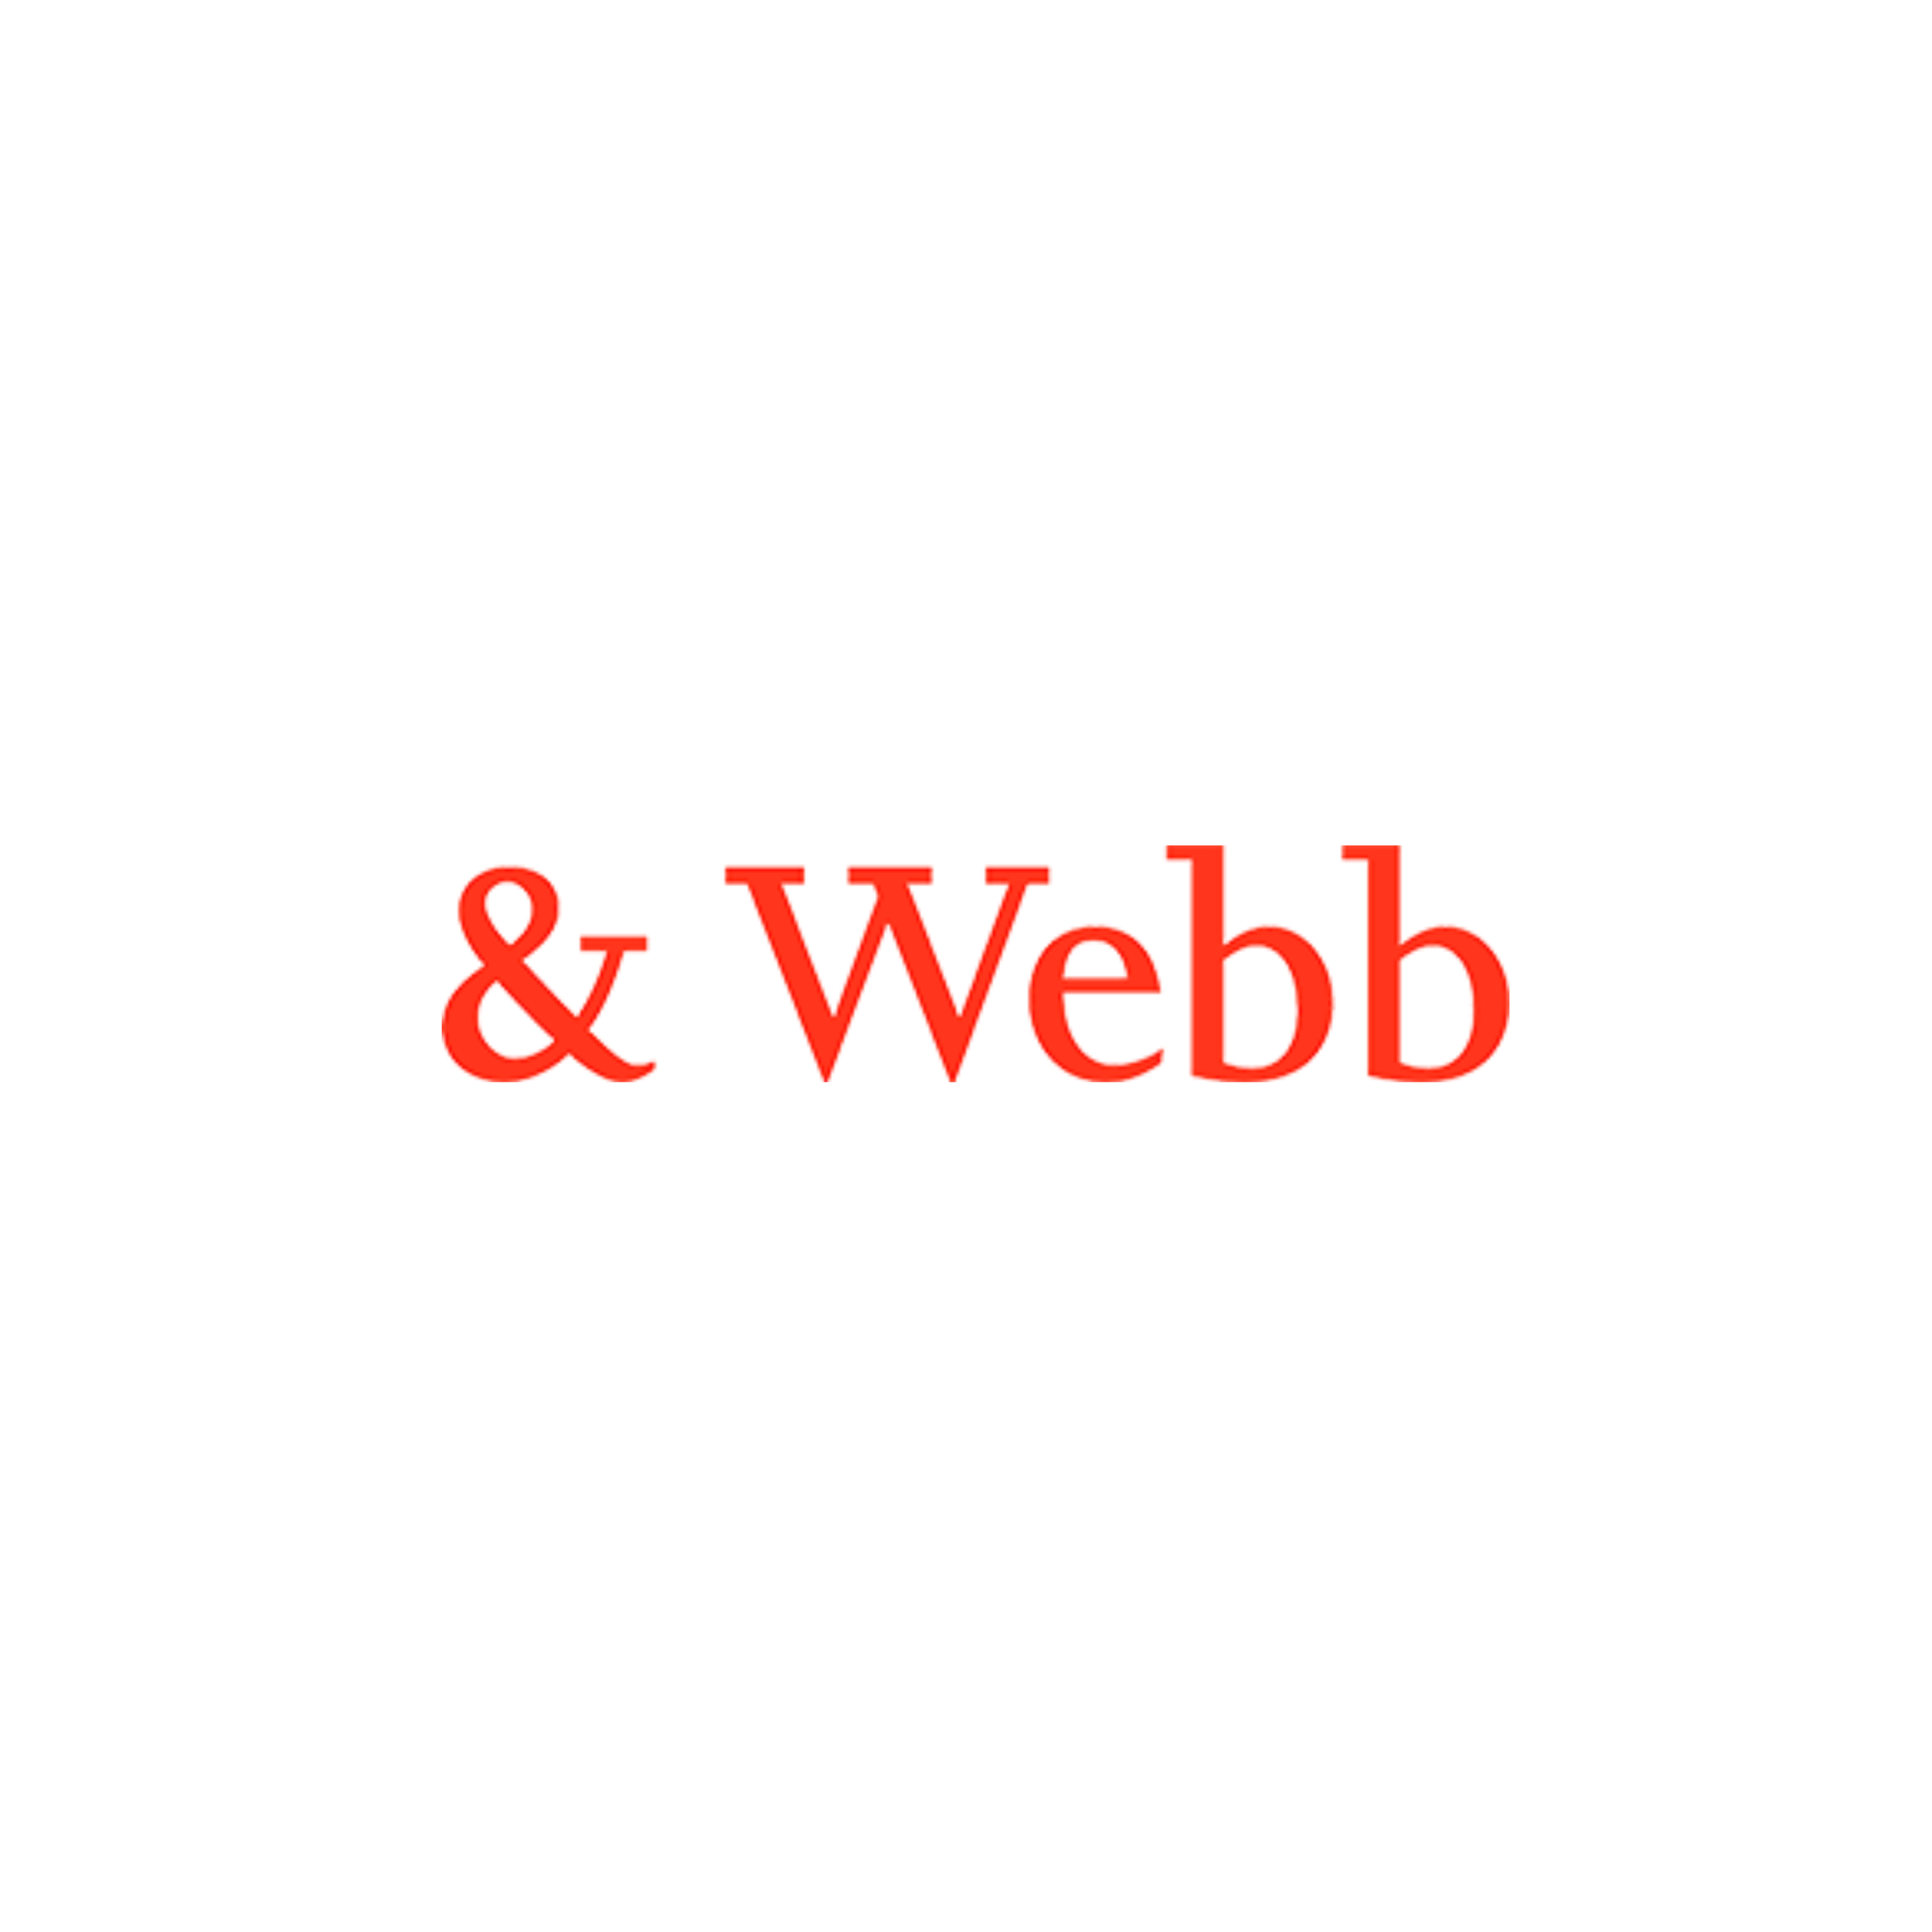 webb& webb.png